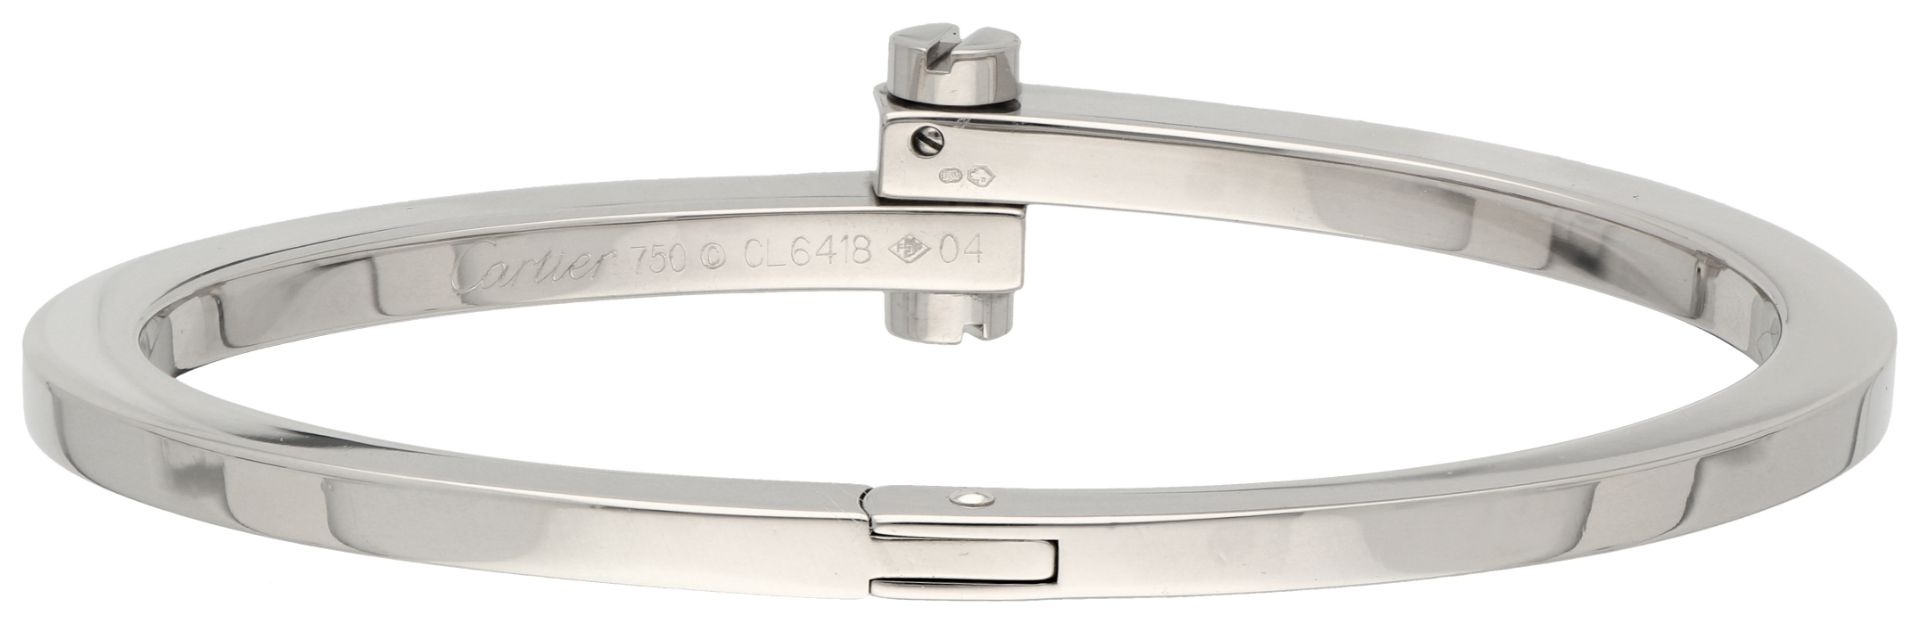 No Reserve - Cartier Menotte 18K white gold bracelet bangle and screwdriver.